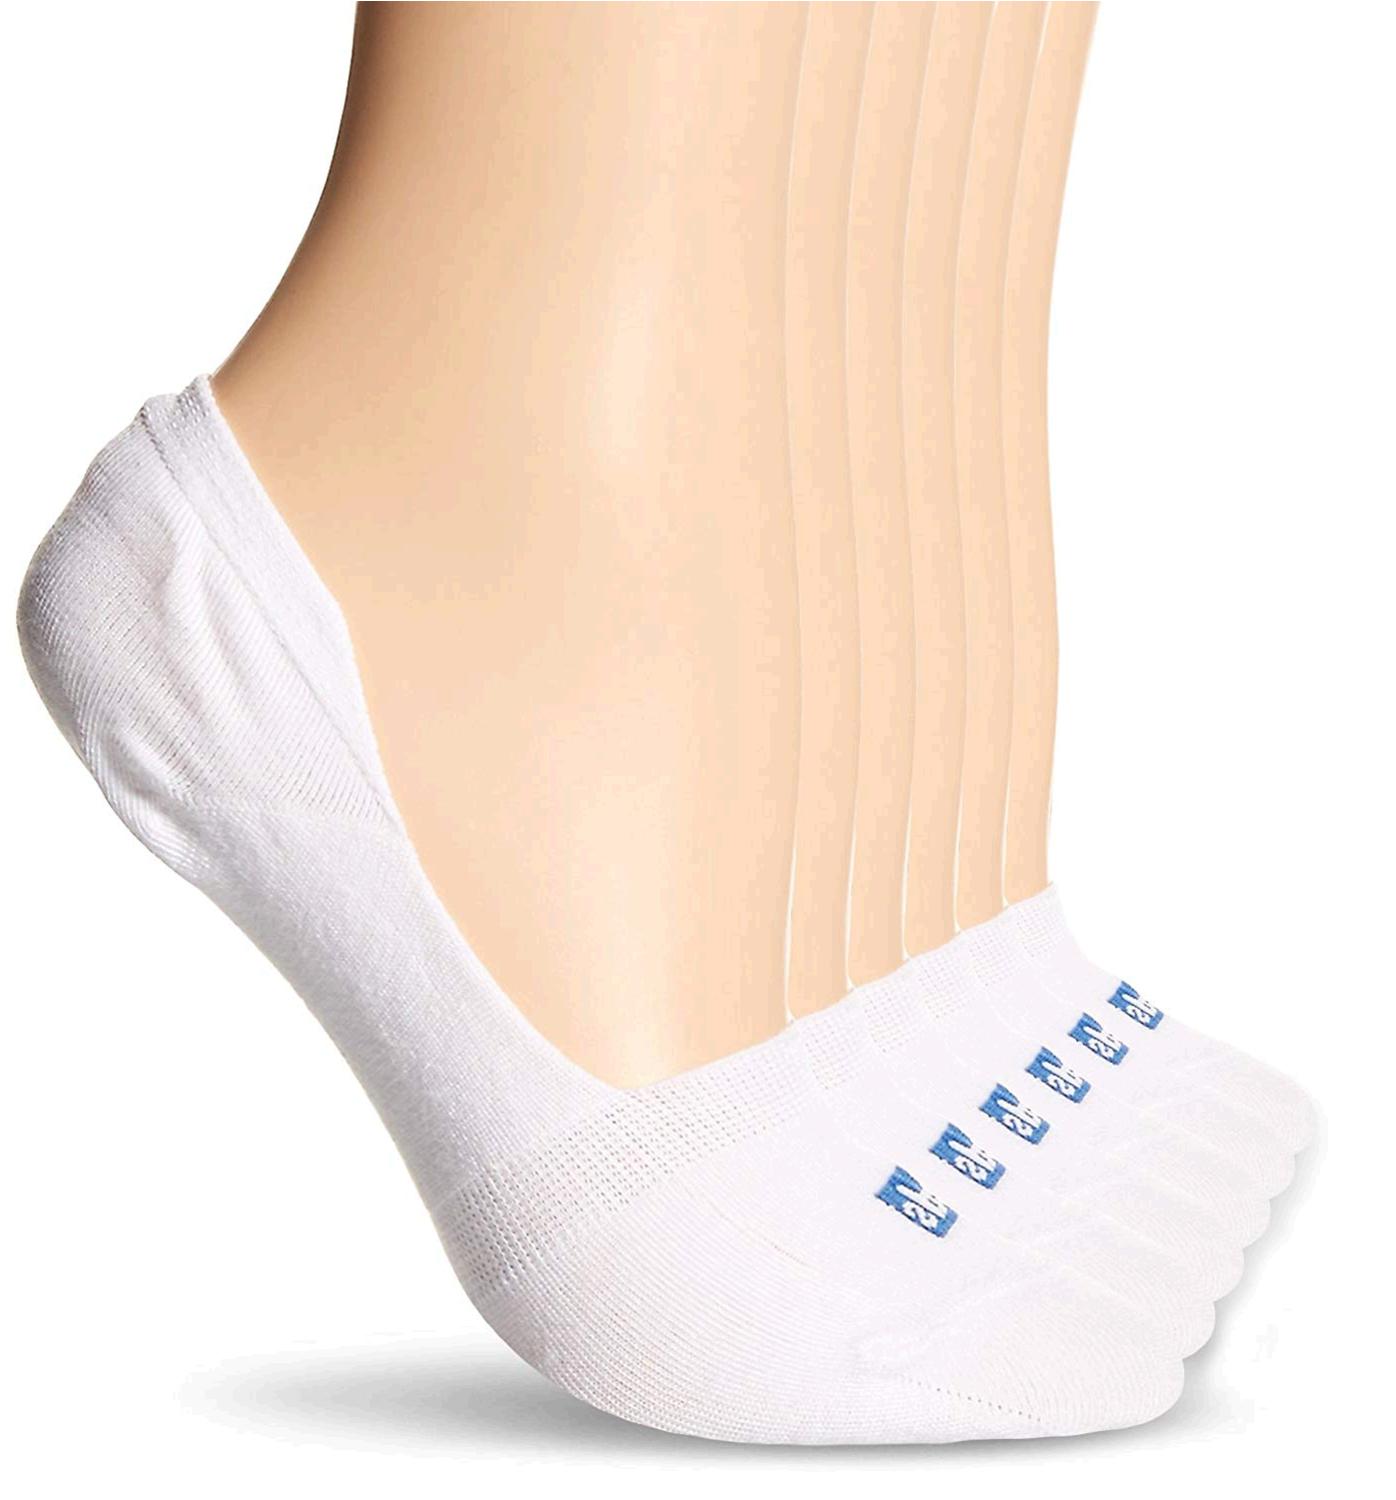 keds no show liner socks